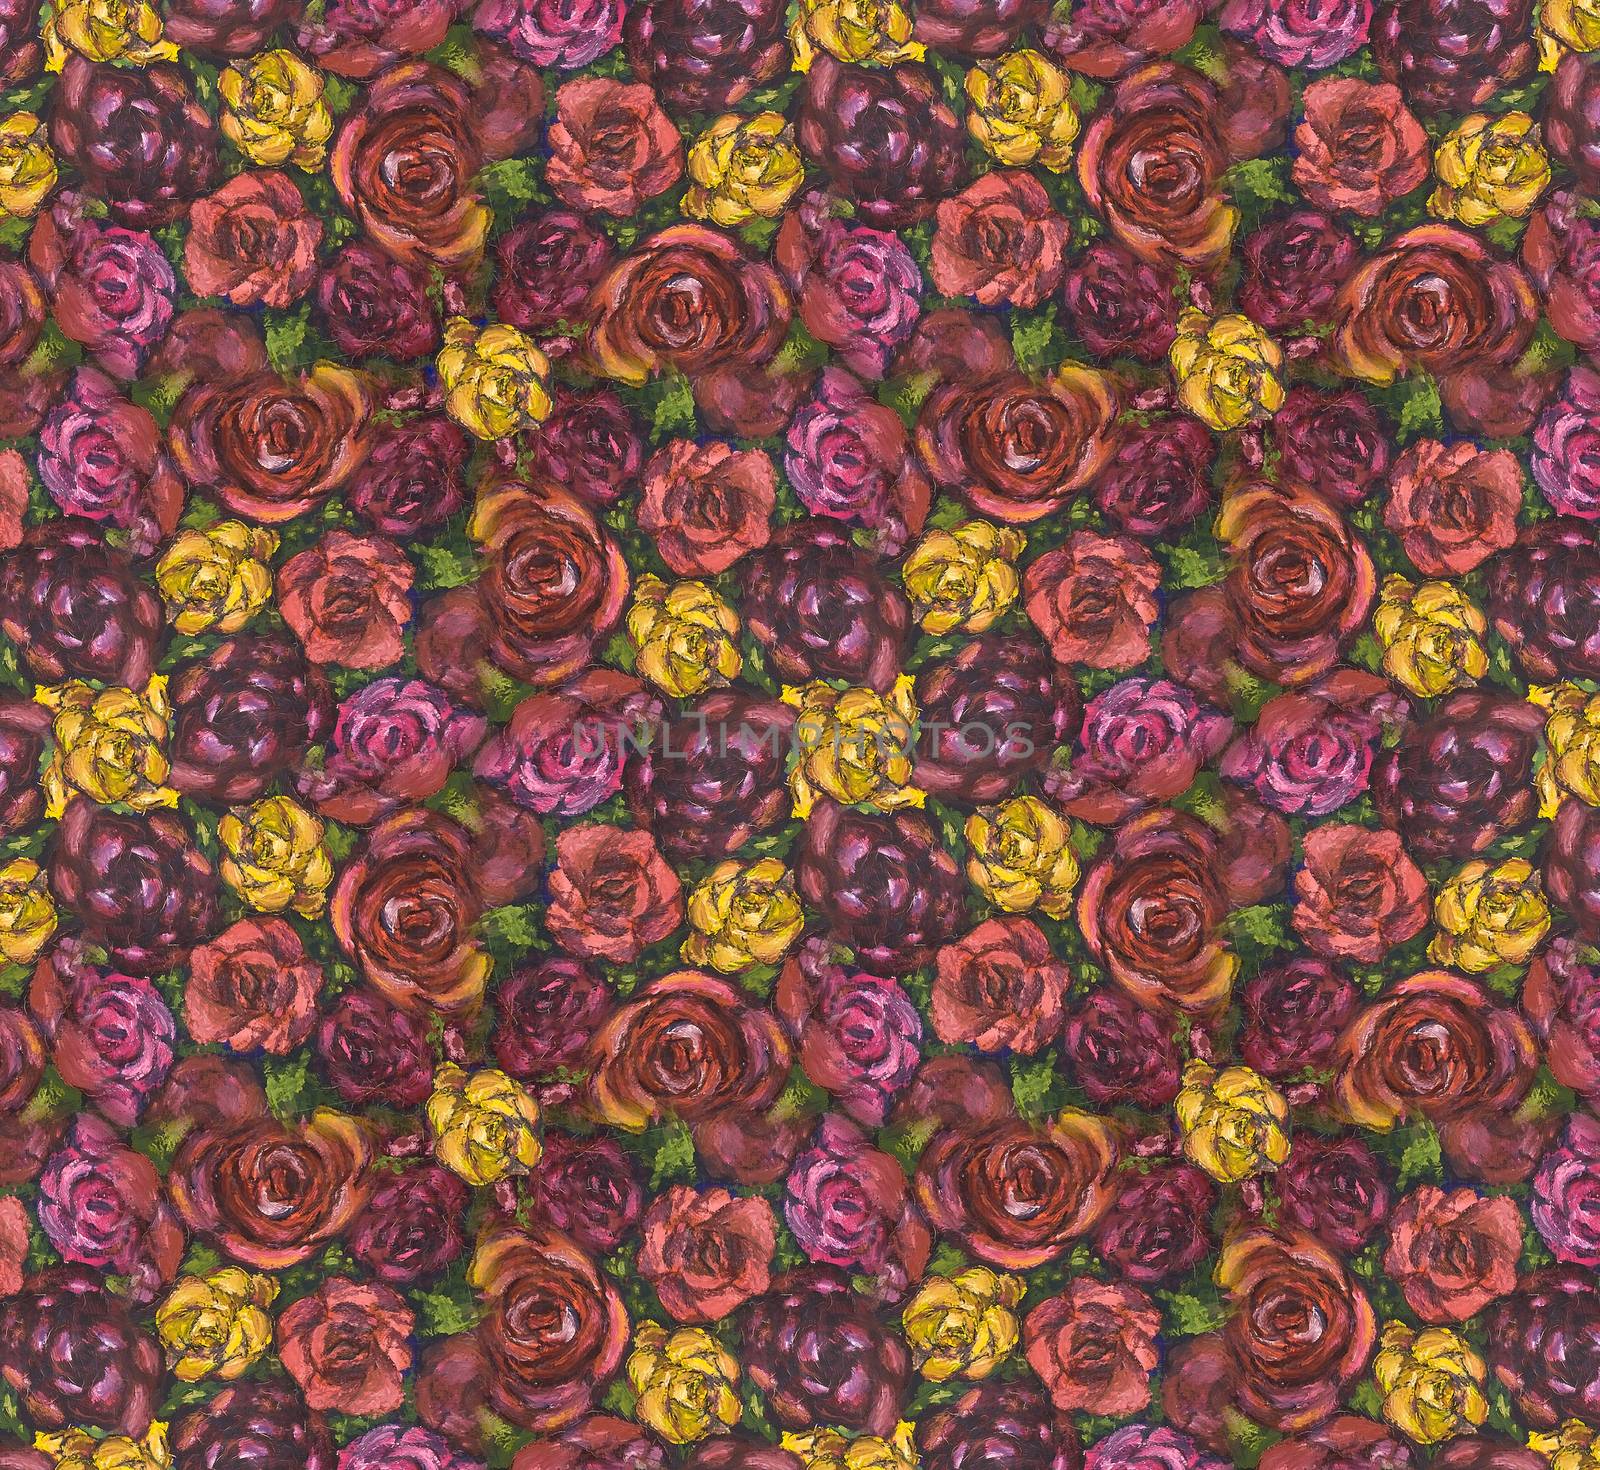 The background of roses by Krakatuk